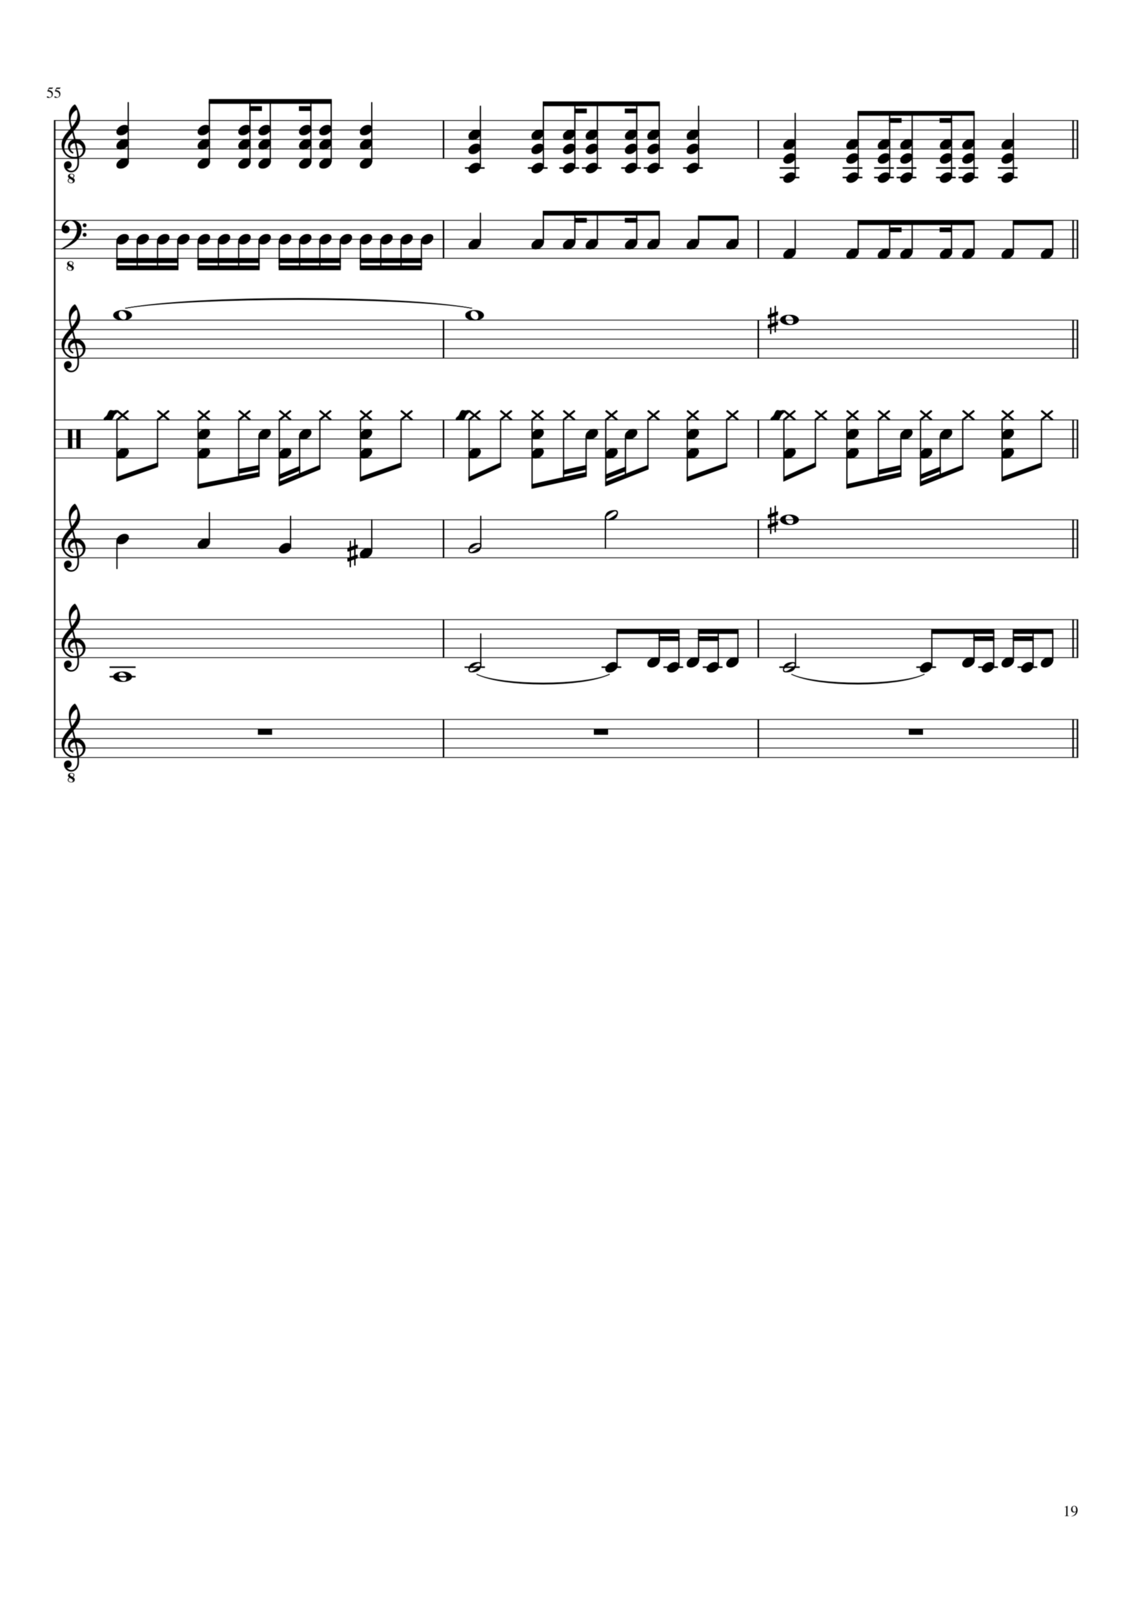 Vechno molodoy slide, Image 19